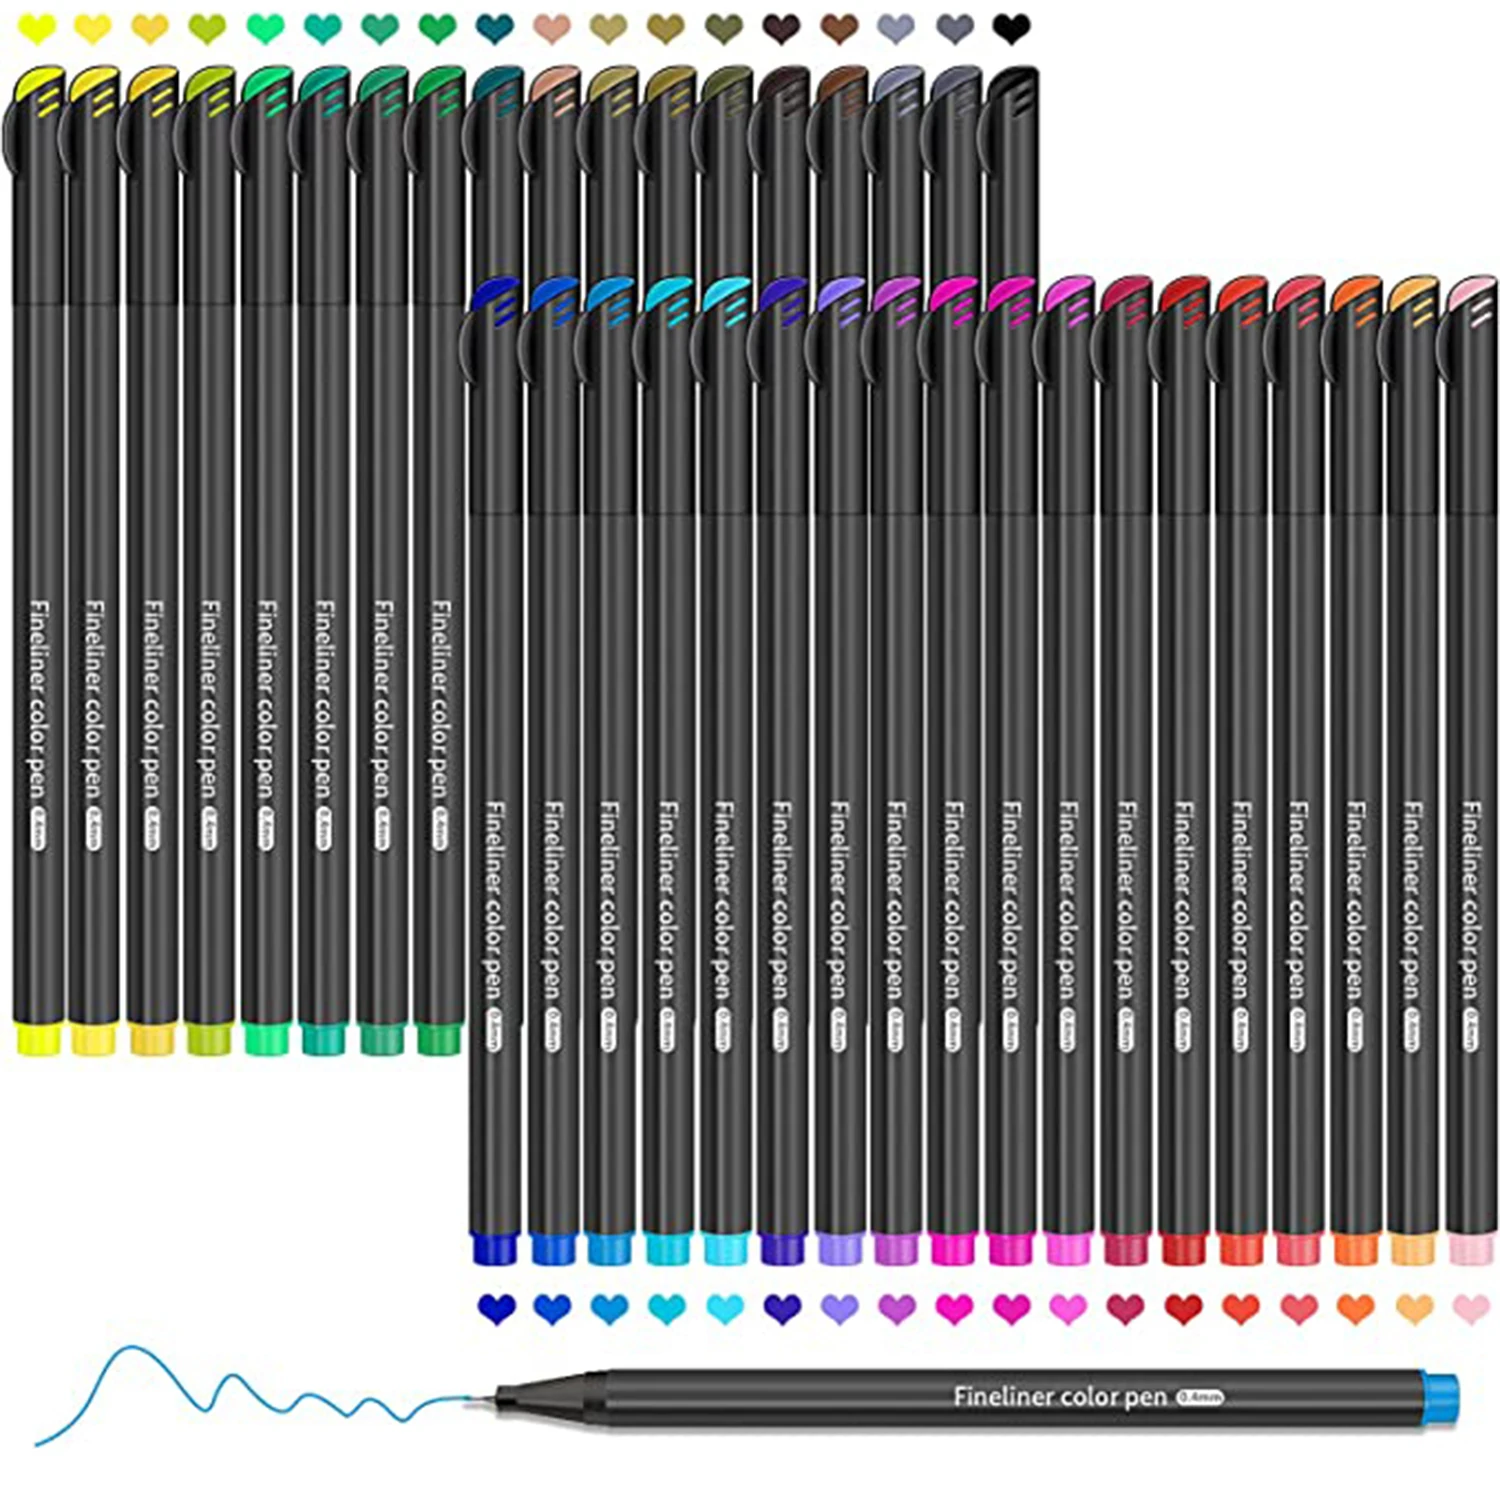 

36 Color Fine Liner Pen Set Journal Markers Pen 0.4mm Micron Fineliners Drawing Sketch Marker Art Markers School Accessories